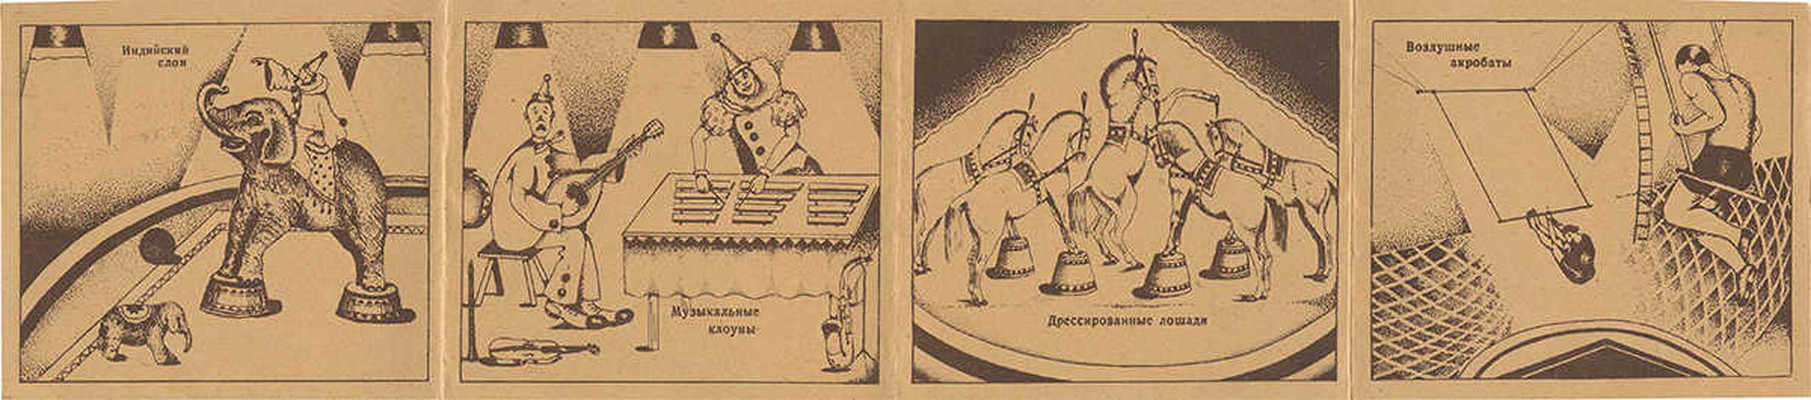 Цирк. [Книжка-раскладушка] / Худож. В.М. Коротков. [М.]: Картфабрика Госгеолиздата, 1947.